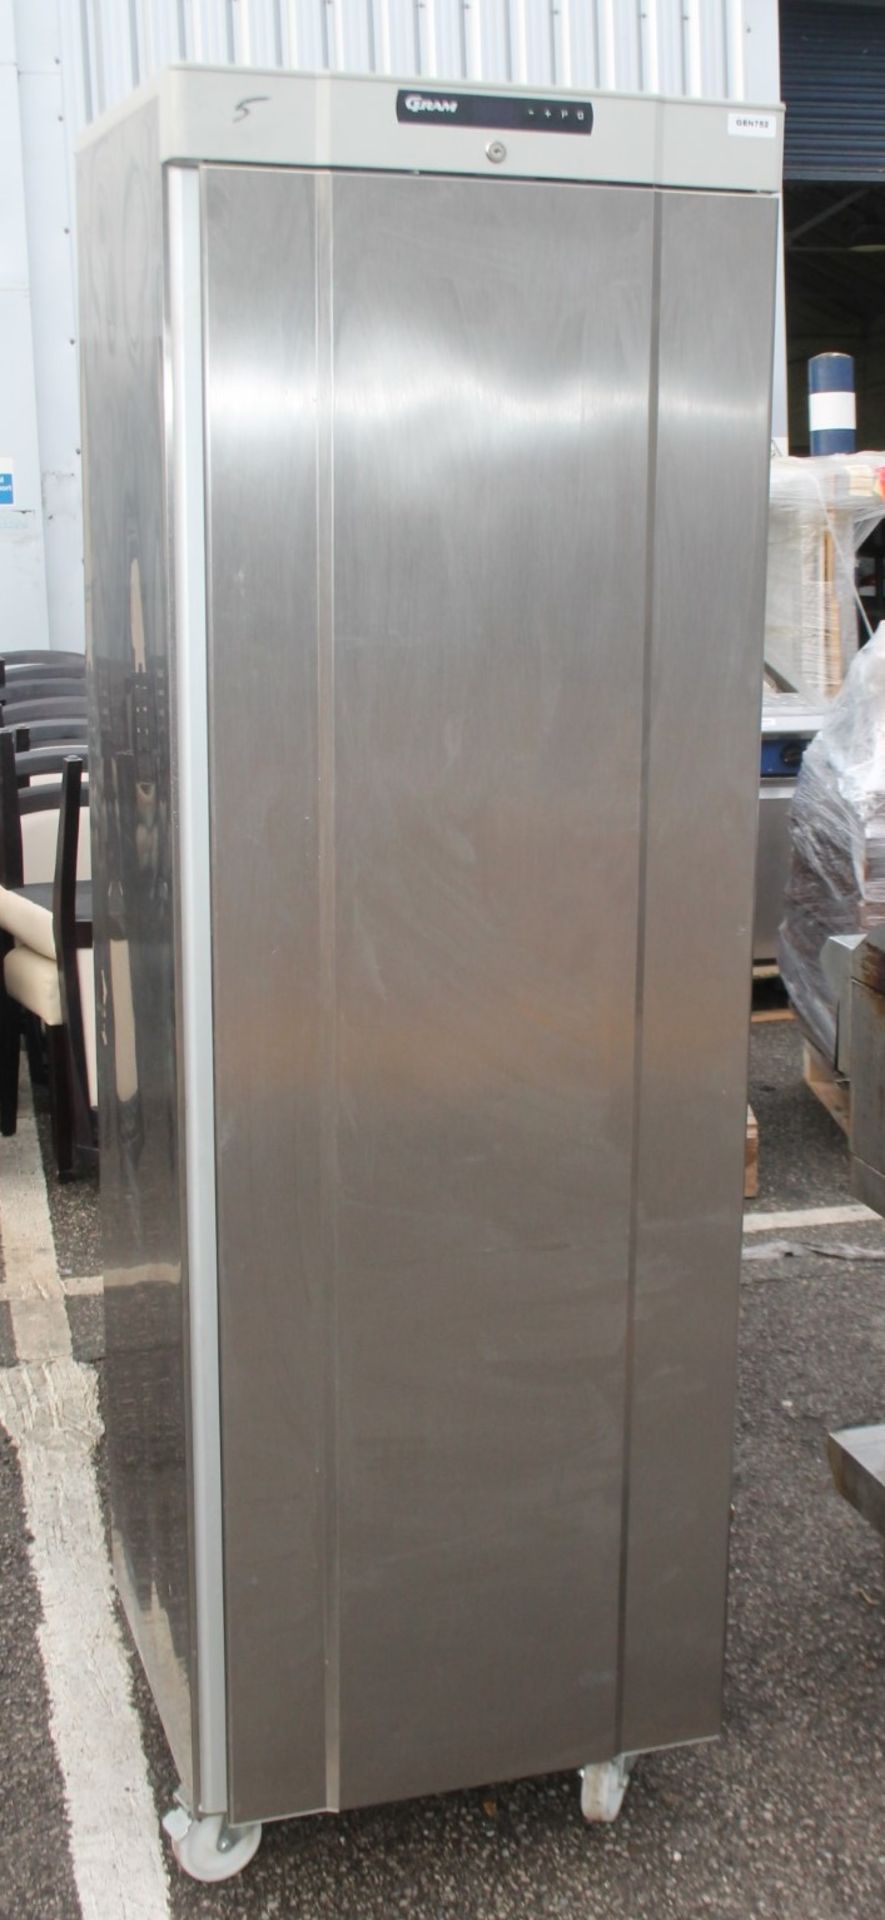 1 x GRAM Stainless Steel Commercial Upright Freezer - Ref: GEN754 WH2 - CL811 BEL - Location: